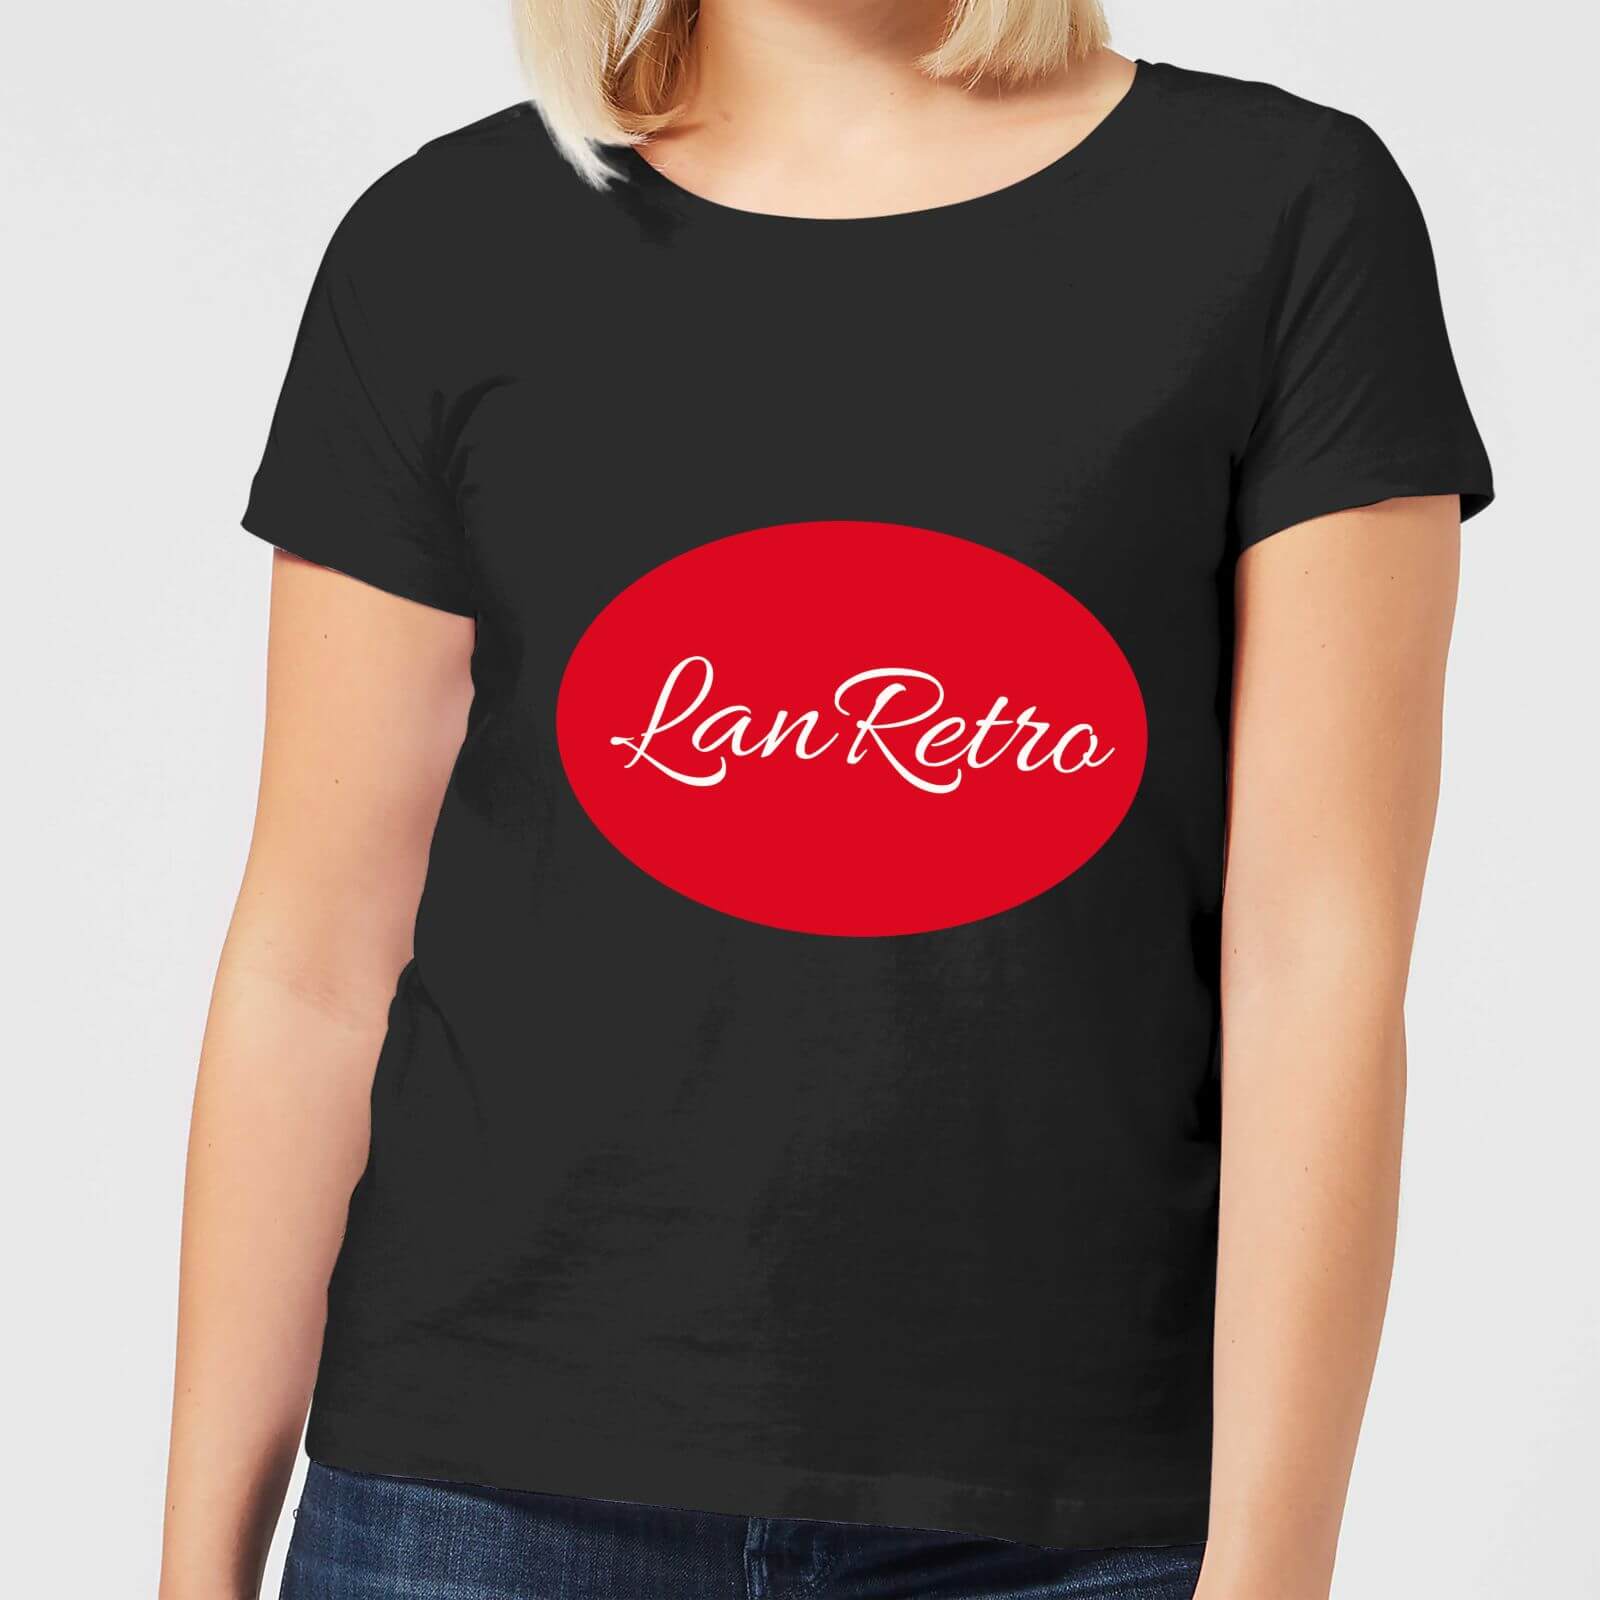 Lanre Retro Lanretro Logo Women's T-Shirt - Black - S - Black